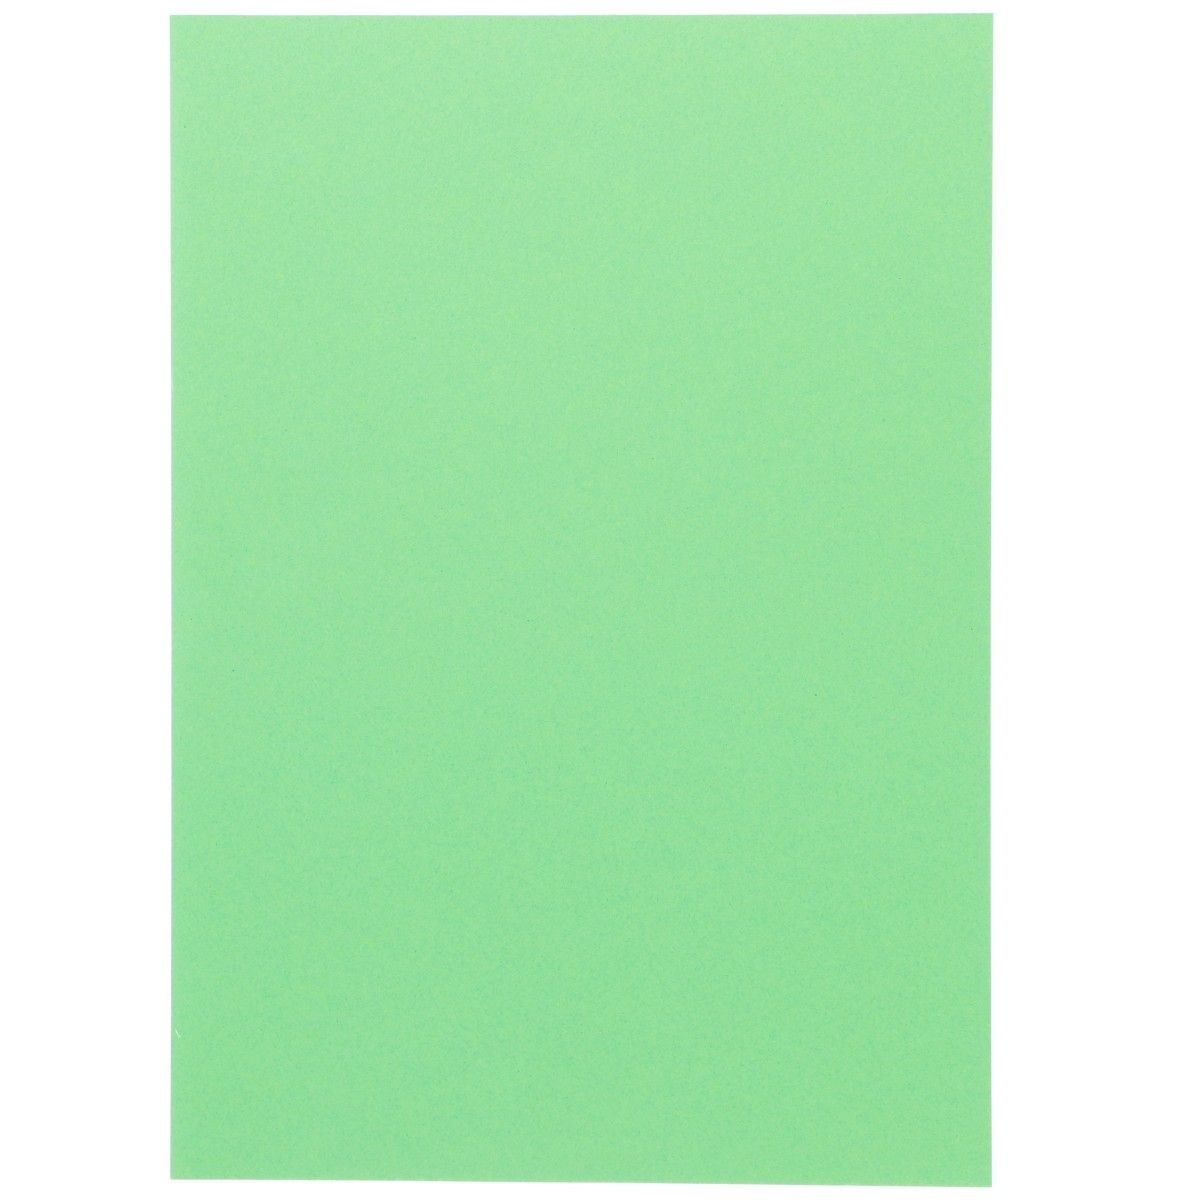 Brystol Canson A4 zielony jasny 185g 50k (200040172)